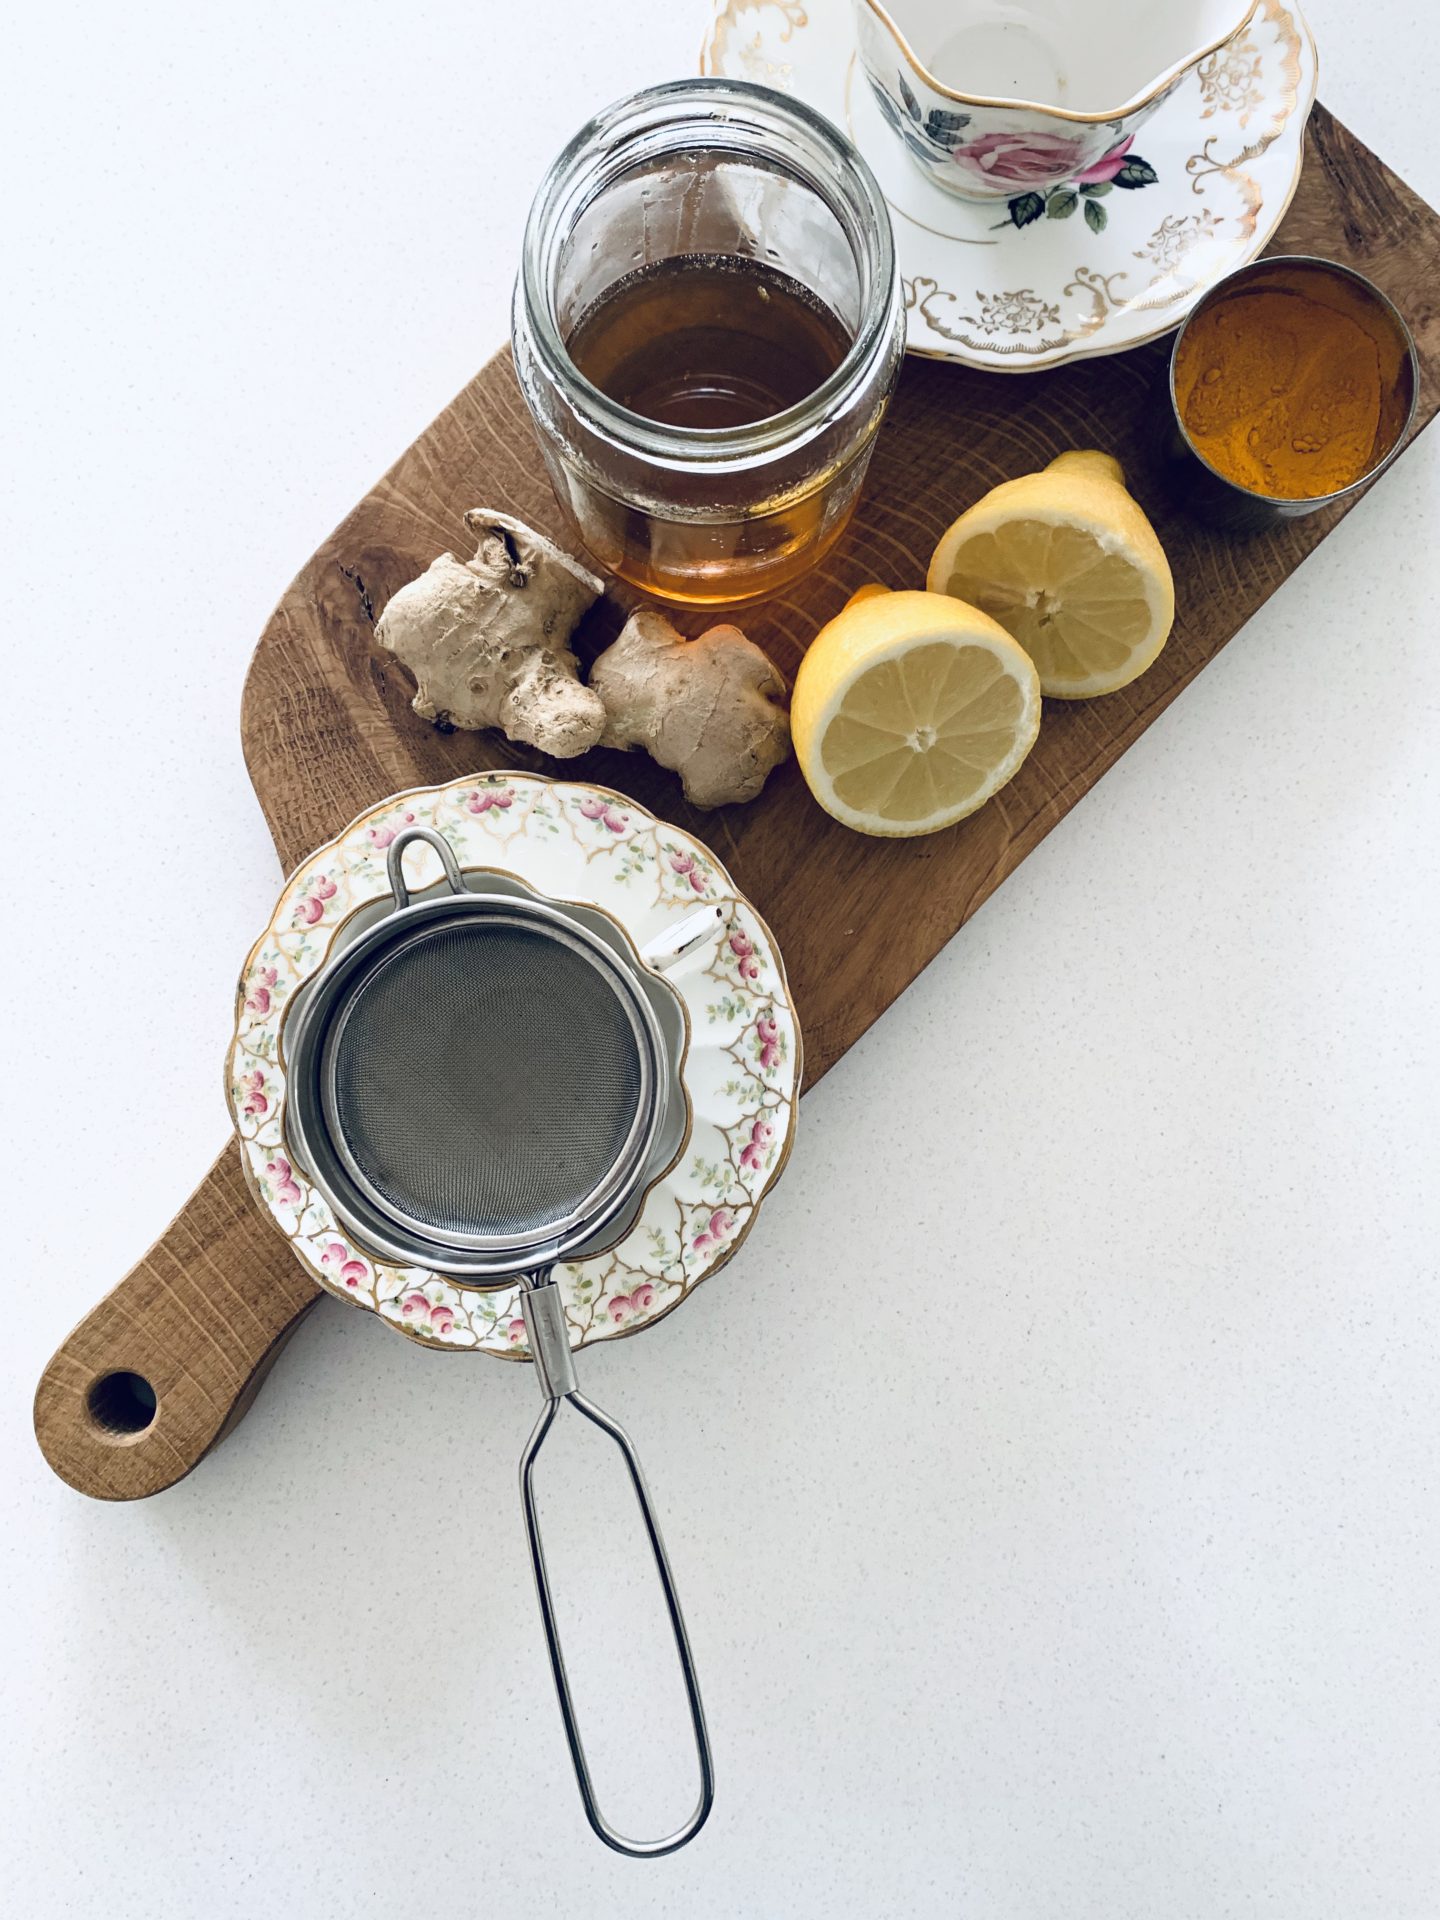 5 Recipe Ideas to enjoy Tea India's Turmeric Chai